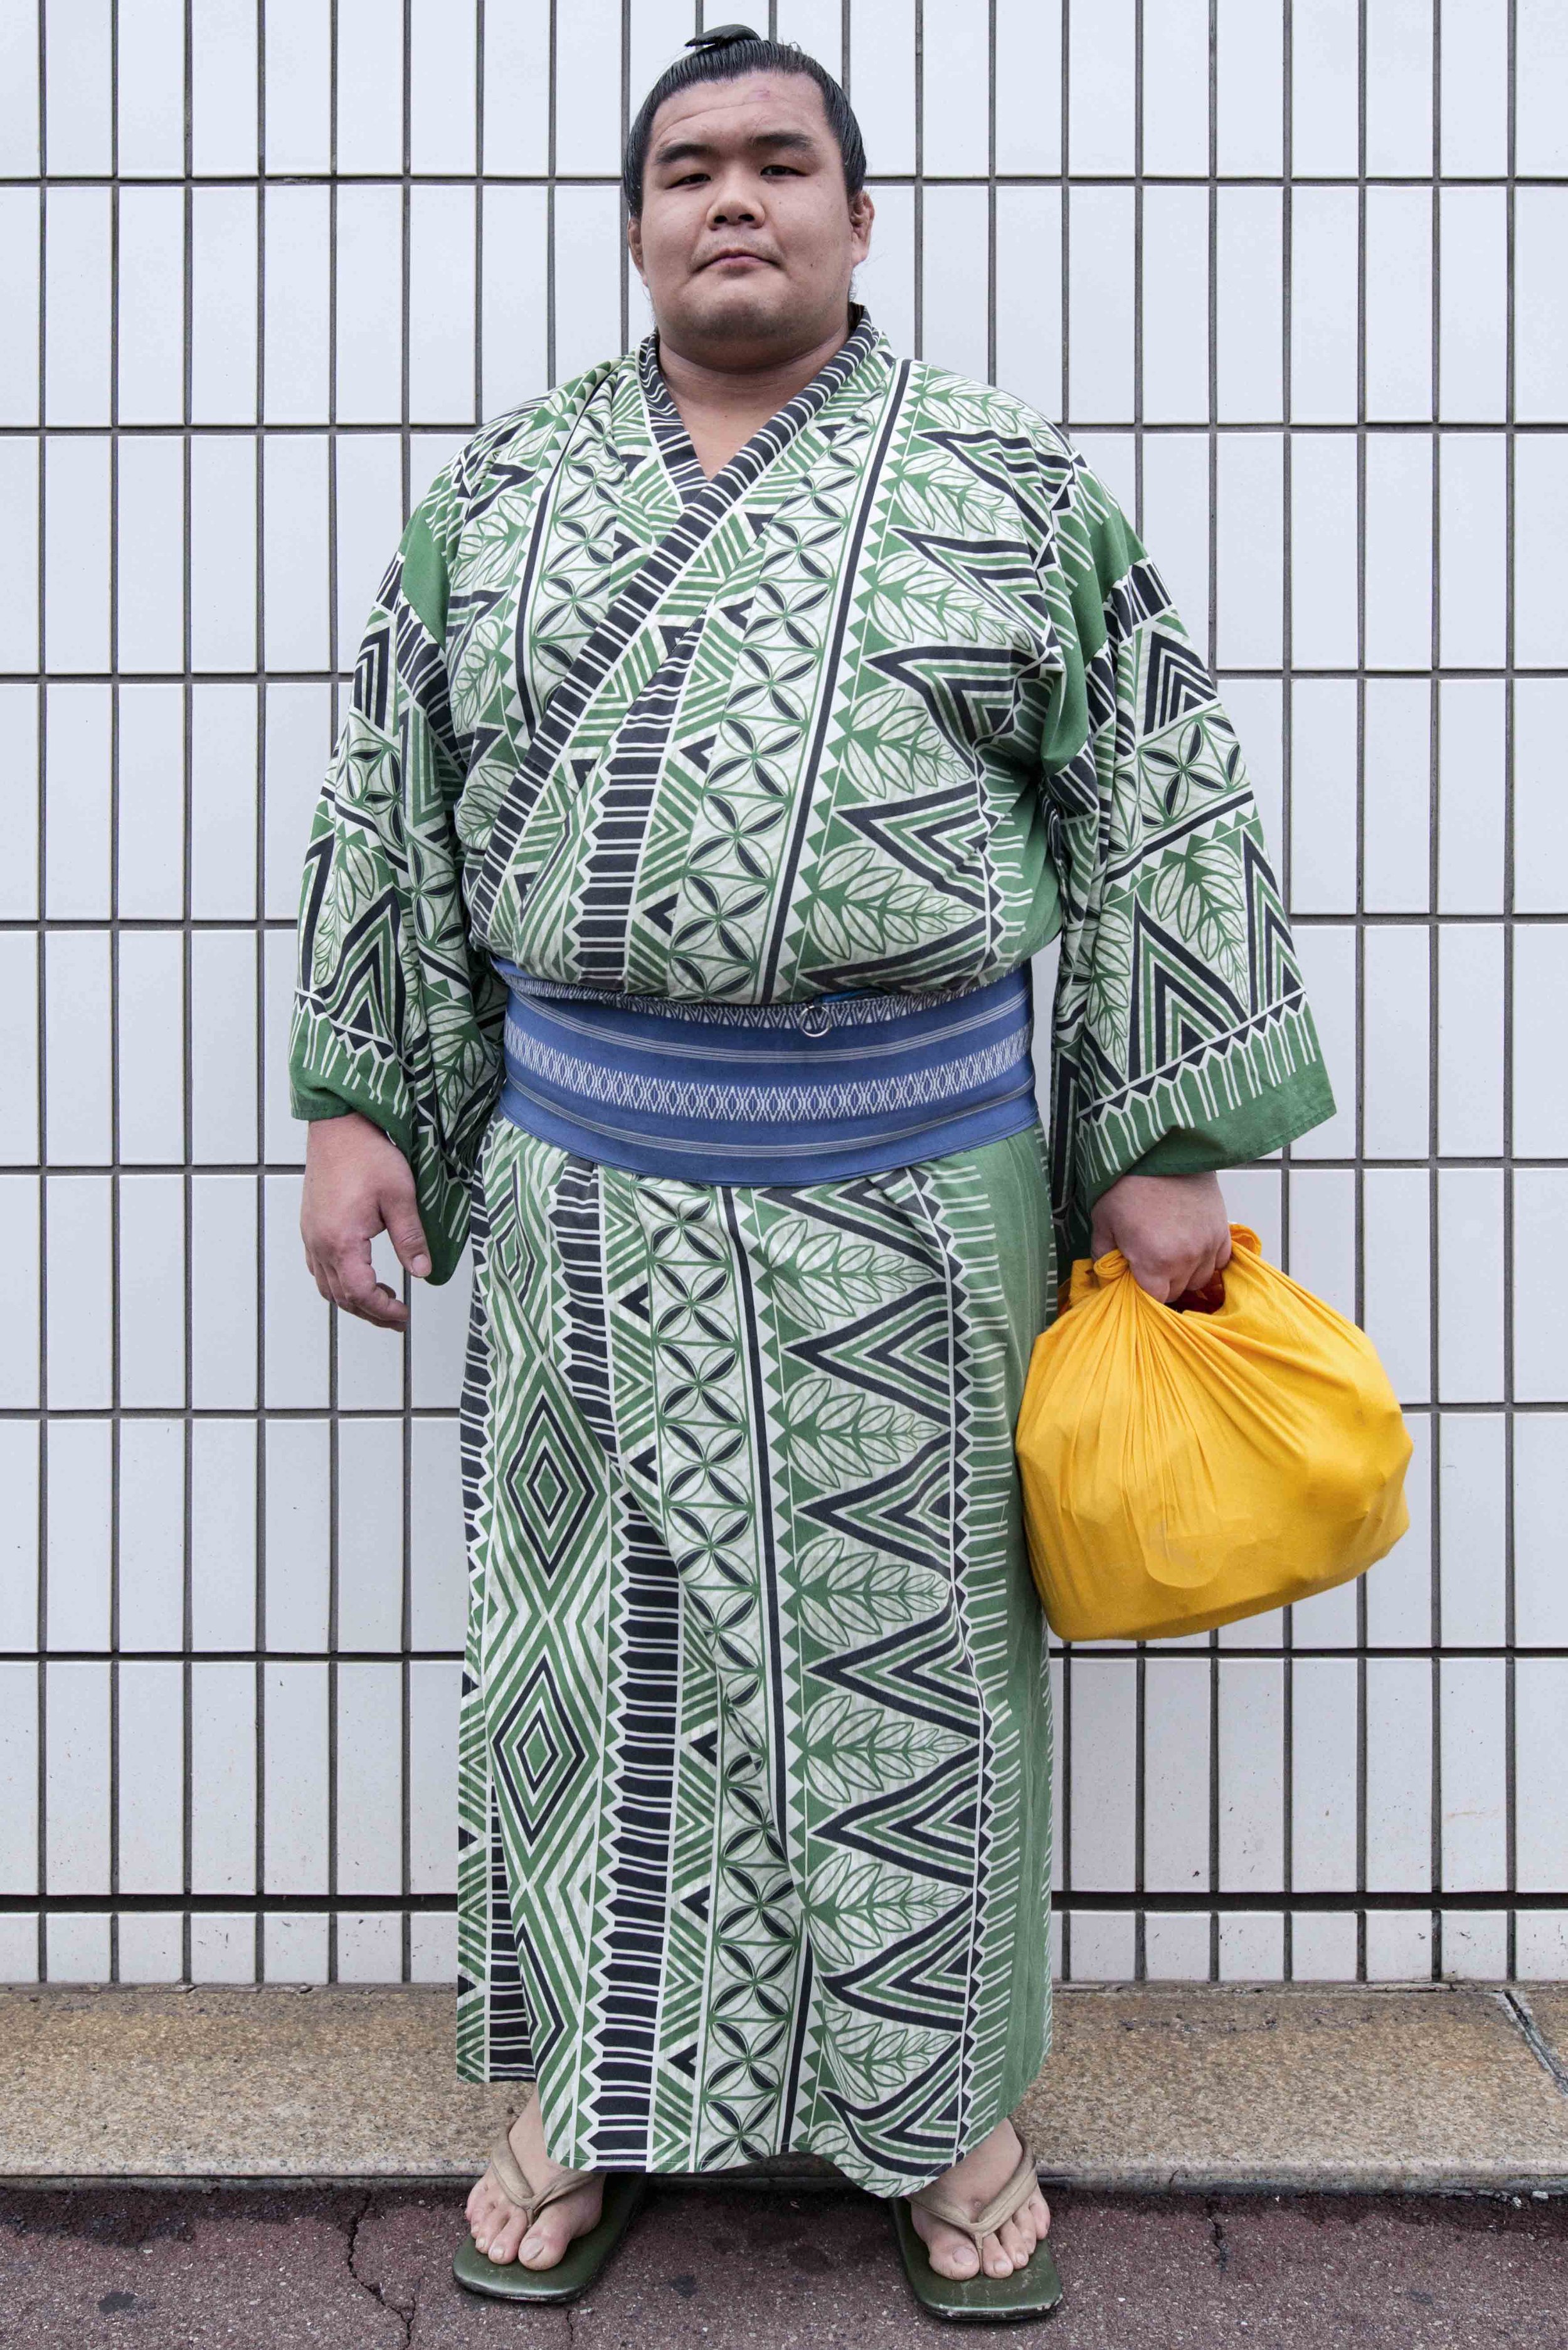 sumo wrestling photography.jpg